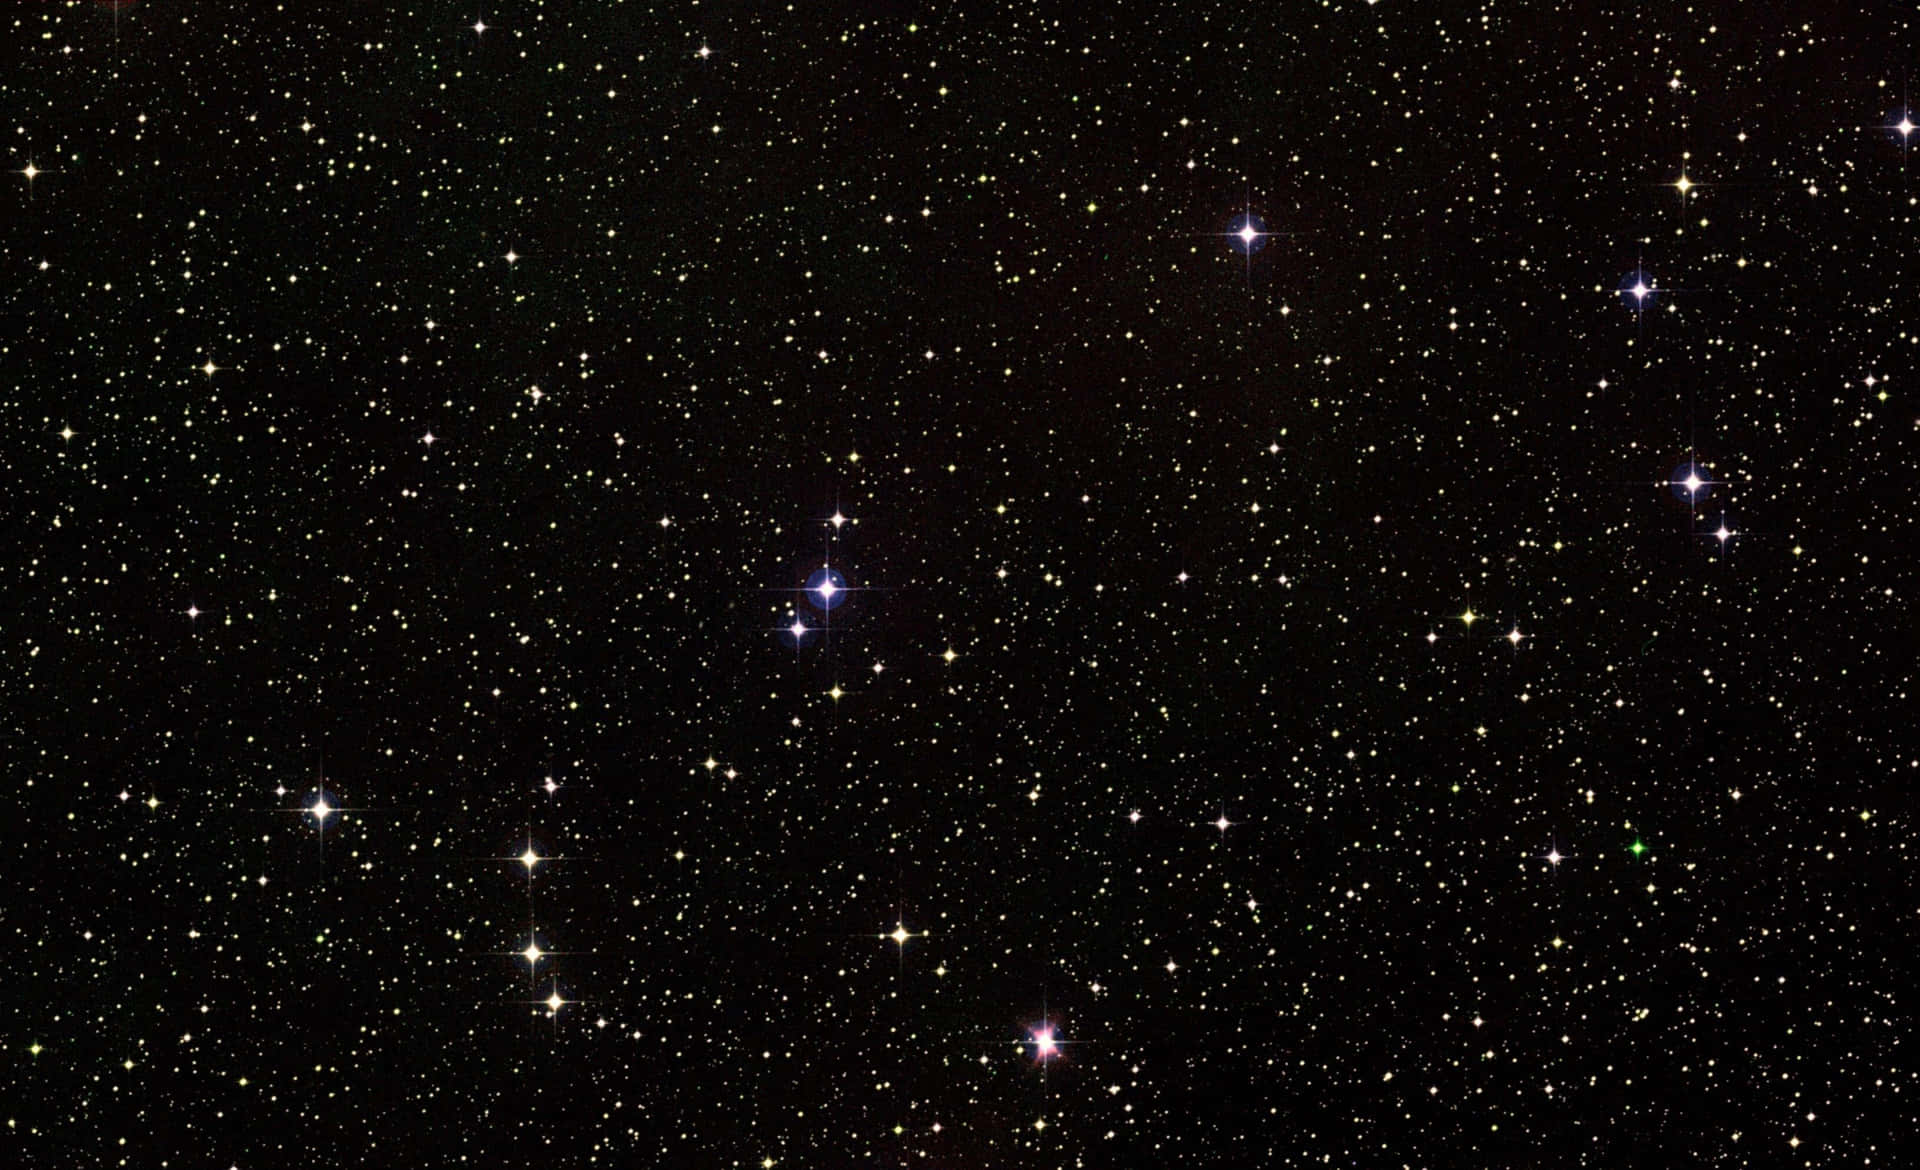 "stargazing At The Monochrome Universe" Wallpaper